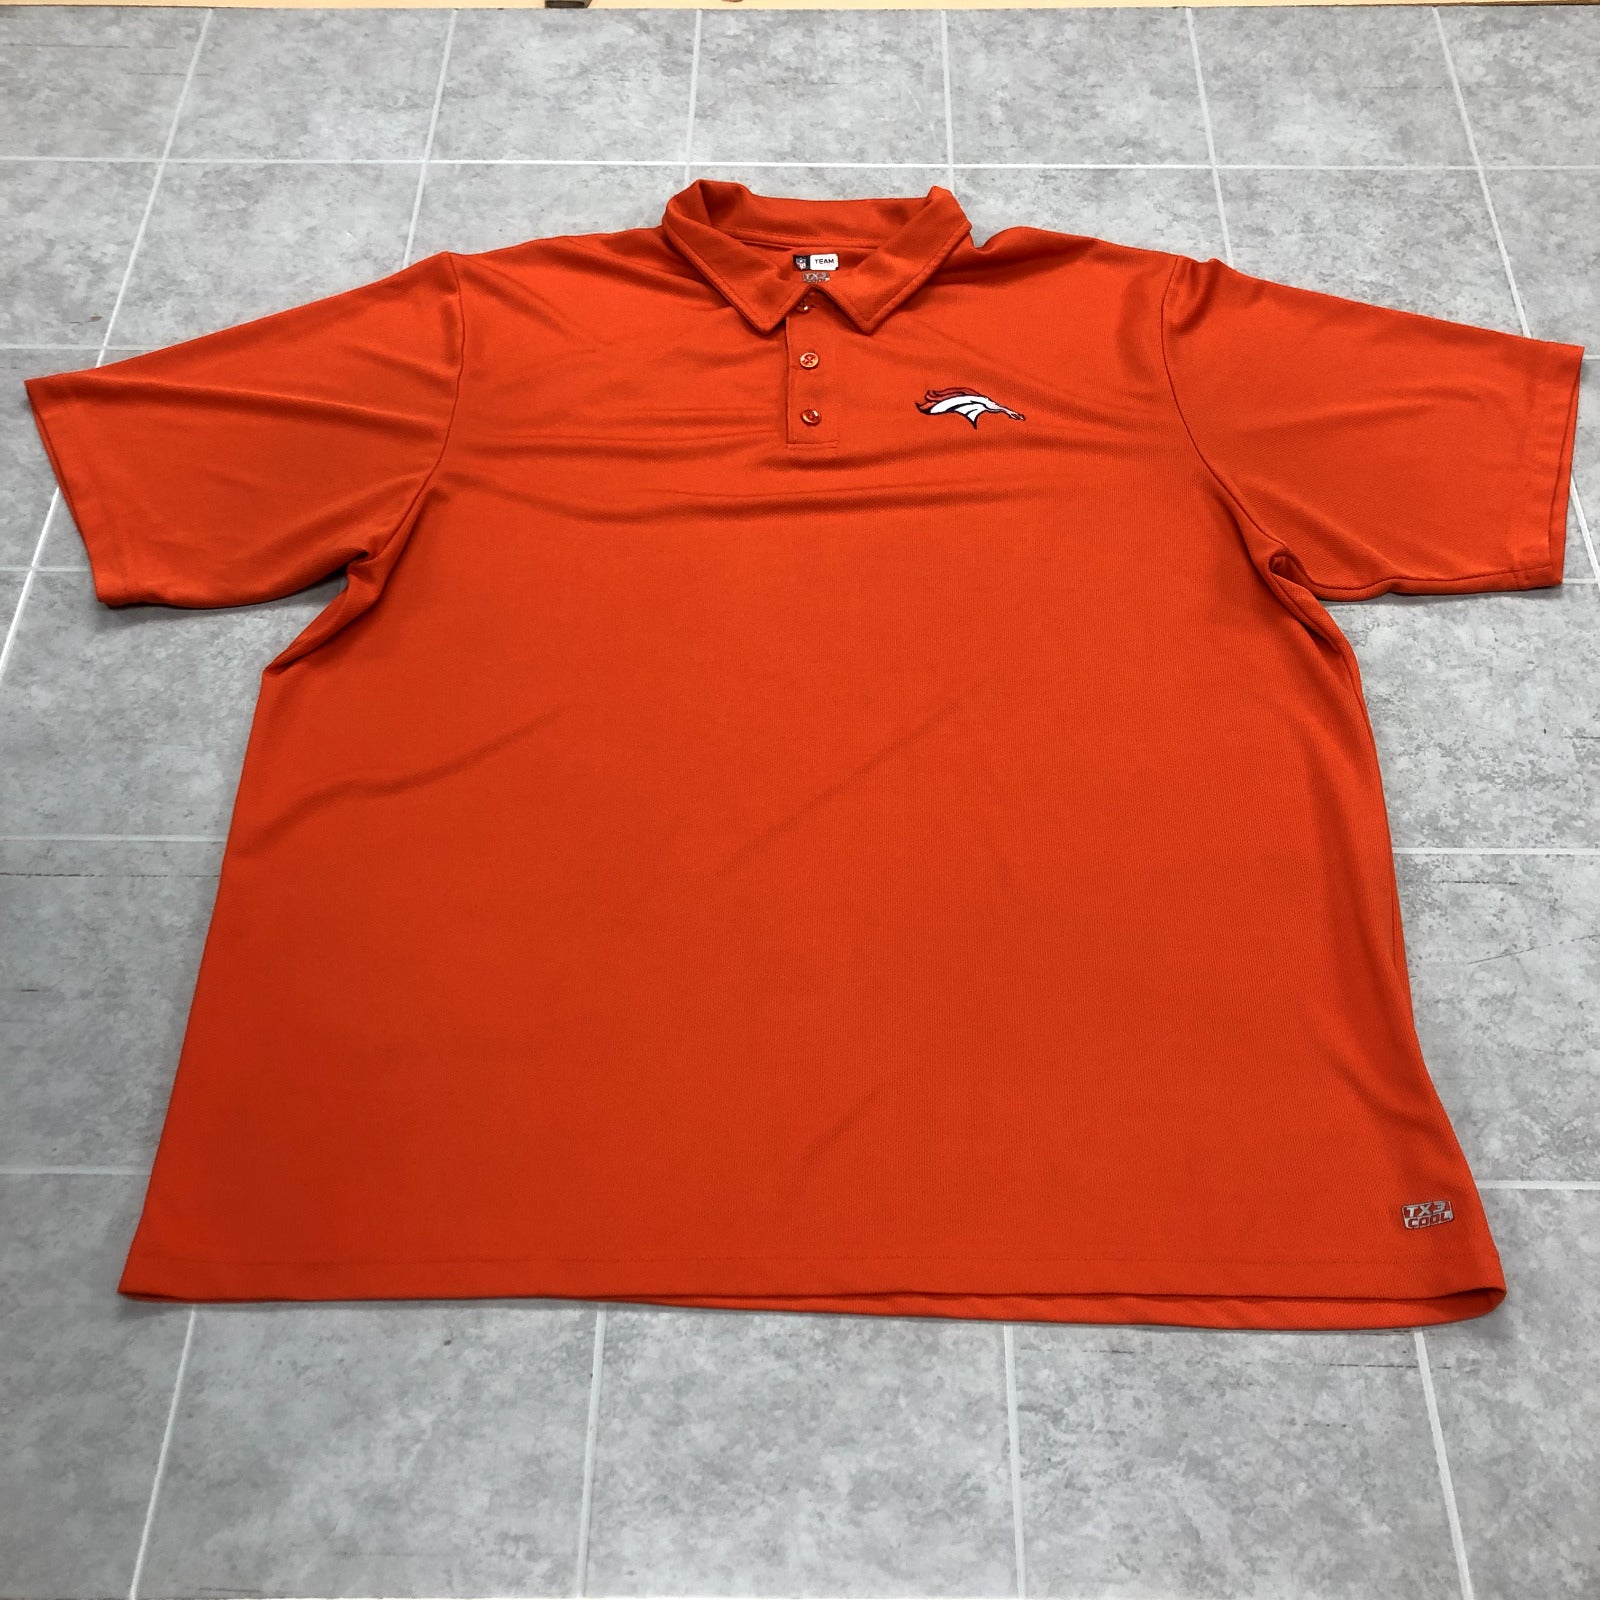 NFL Team Apparel Orange Graphic Denver Broncos Active Wear Polo Adult Size 3XL